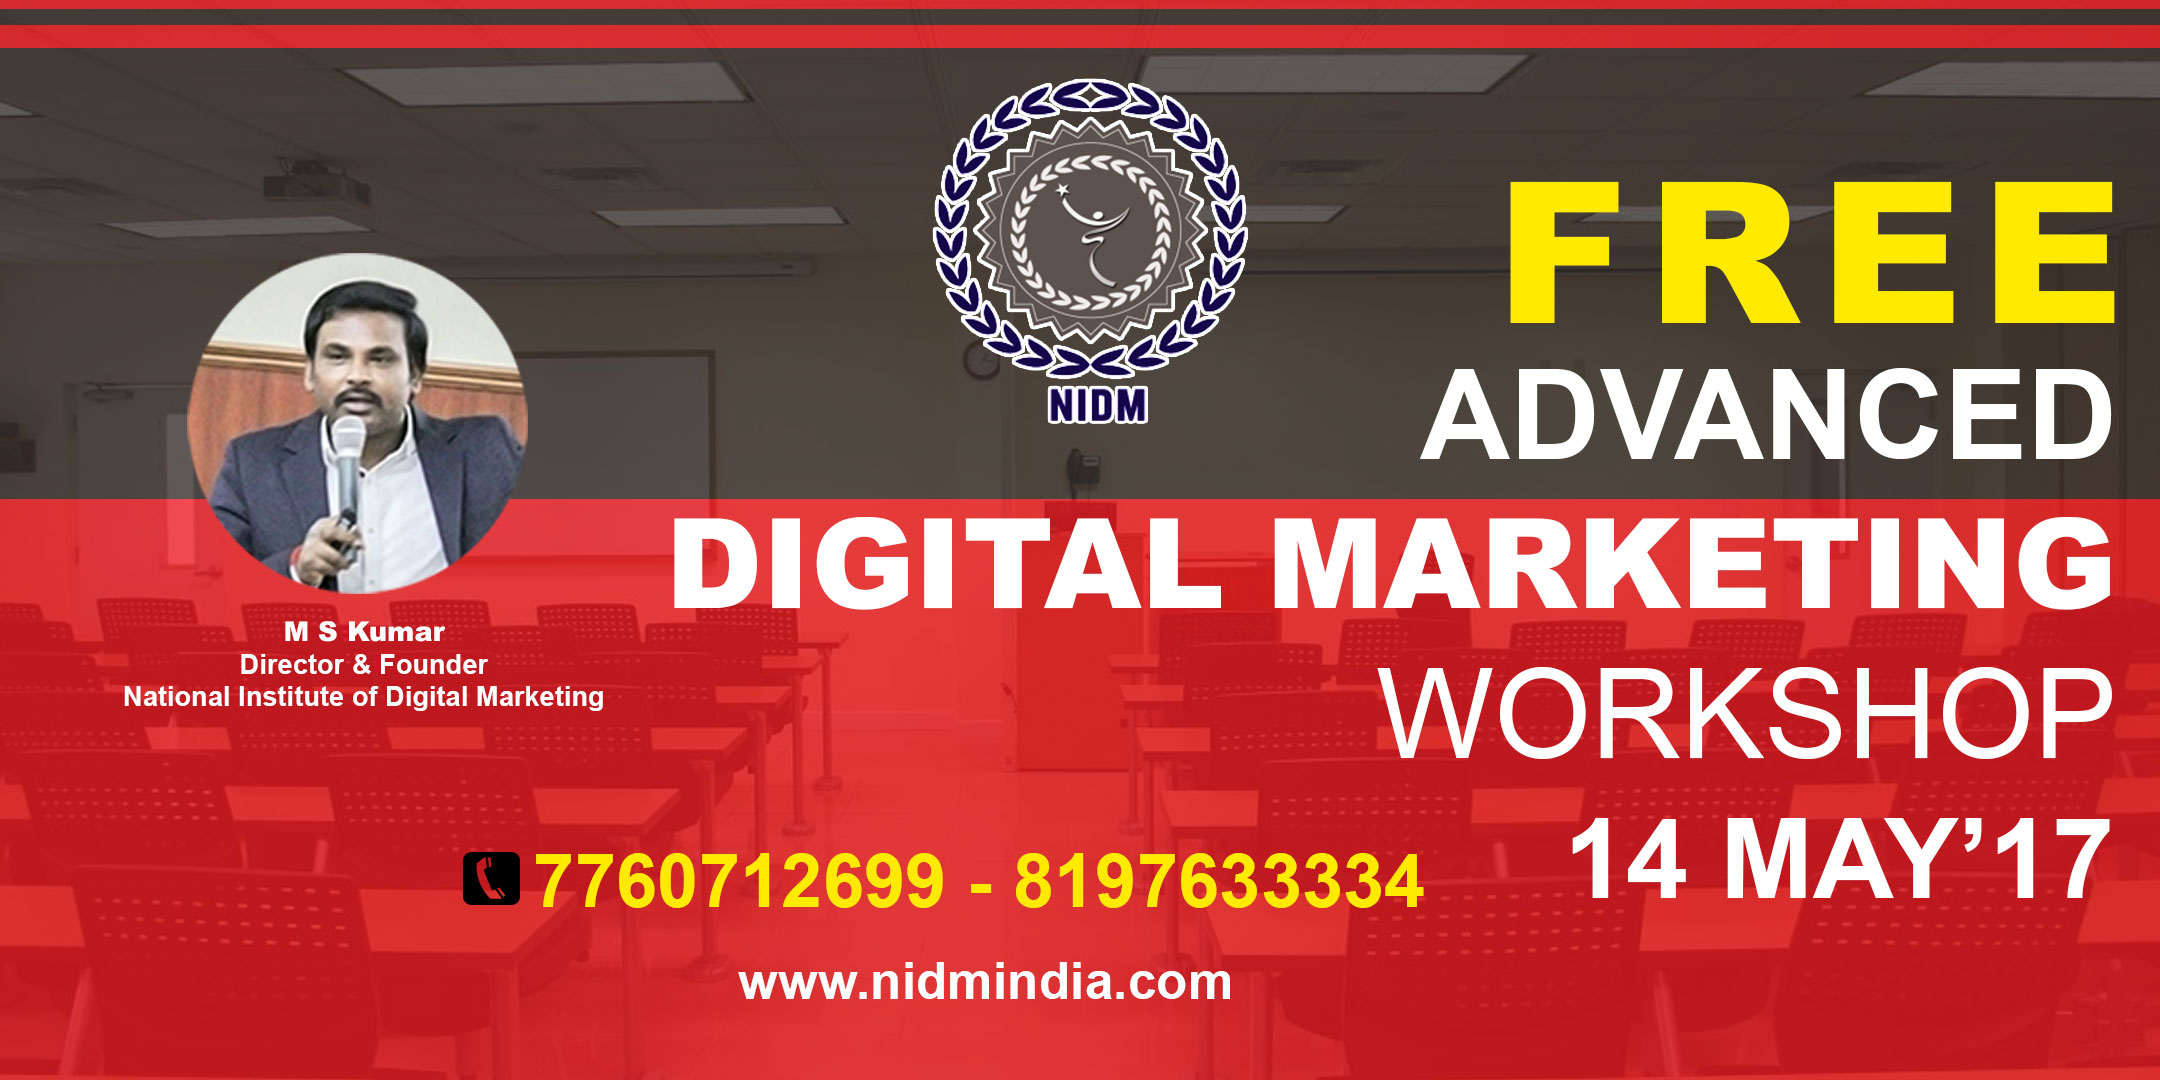 Free Workshop On Advanced Digital Marketing, Bangalore, Karnataka, India